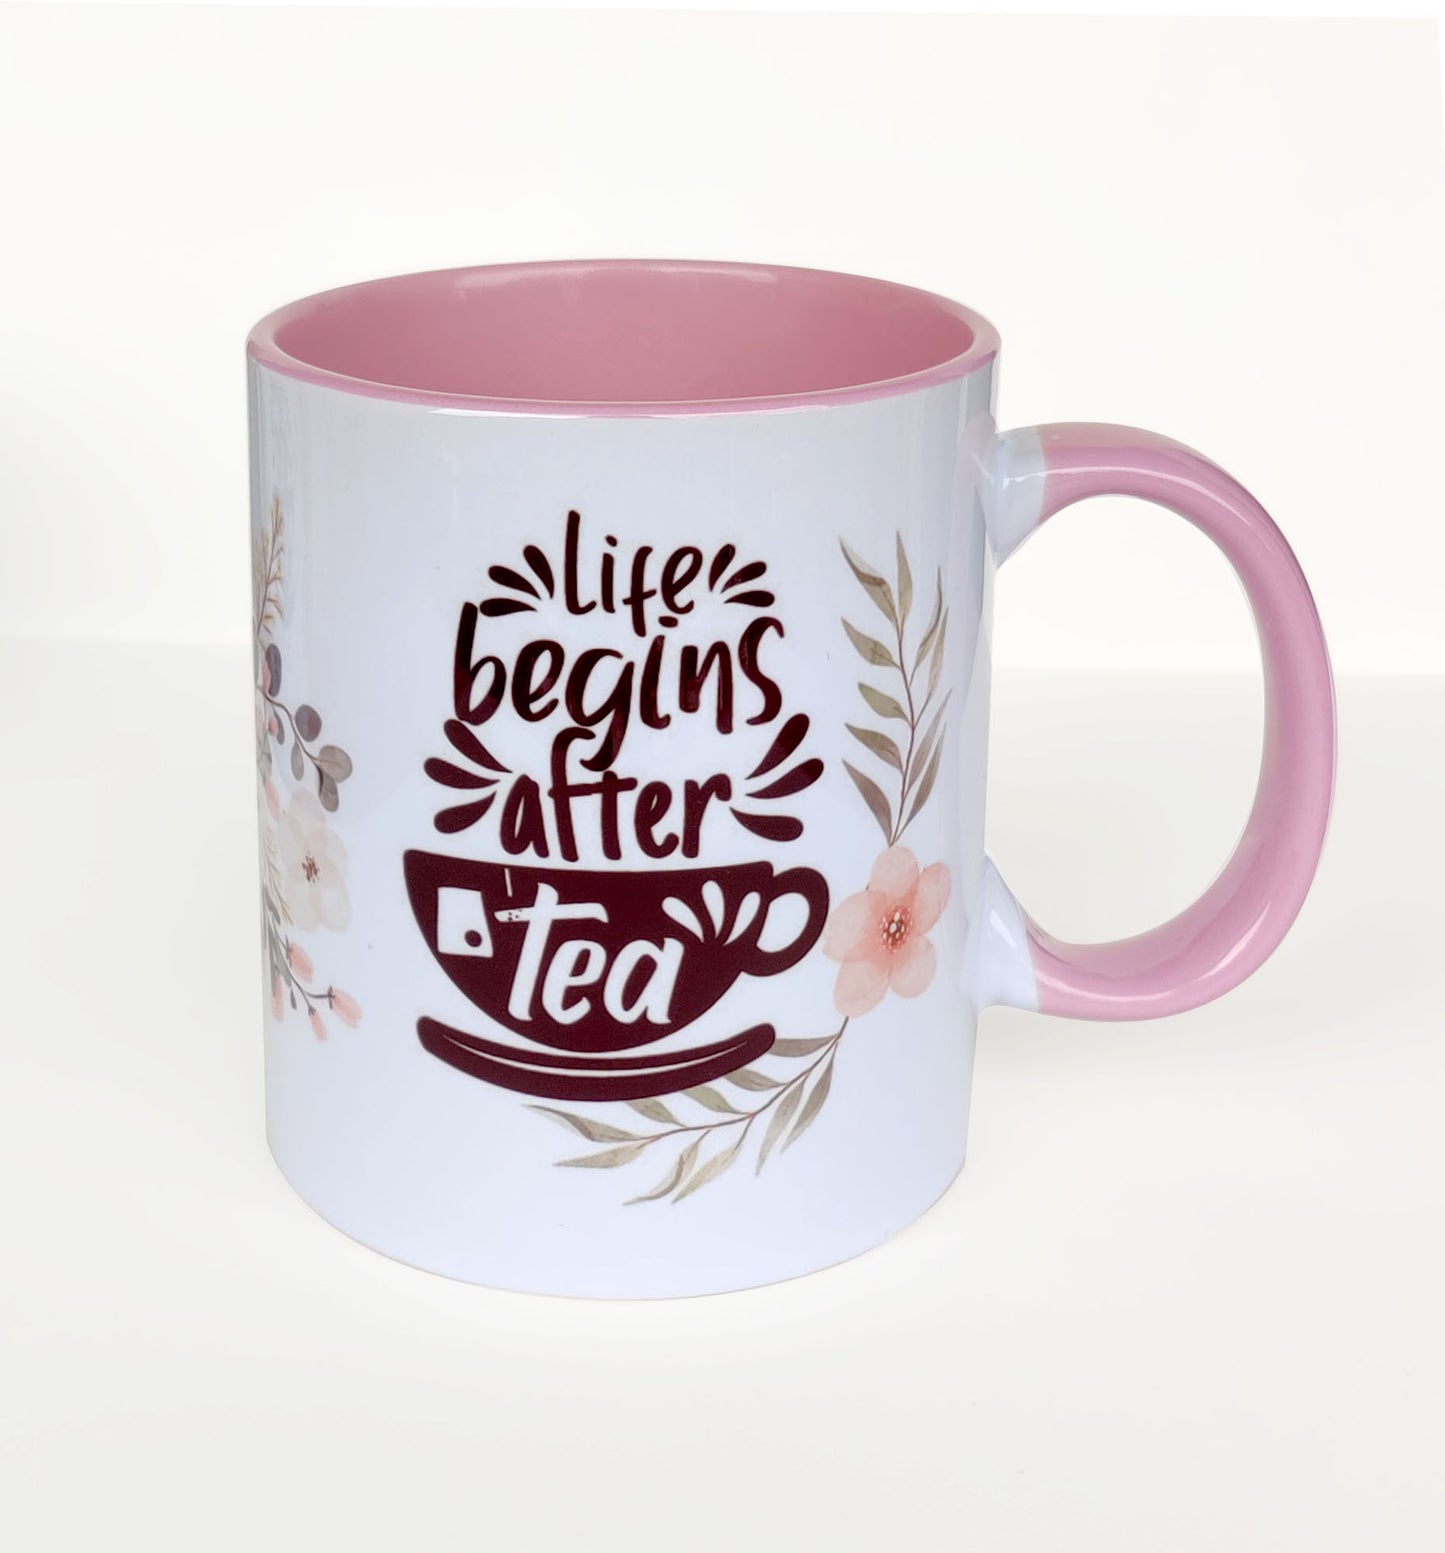 Life begins after Tea mug